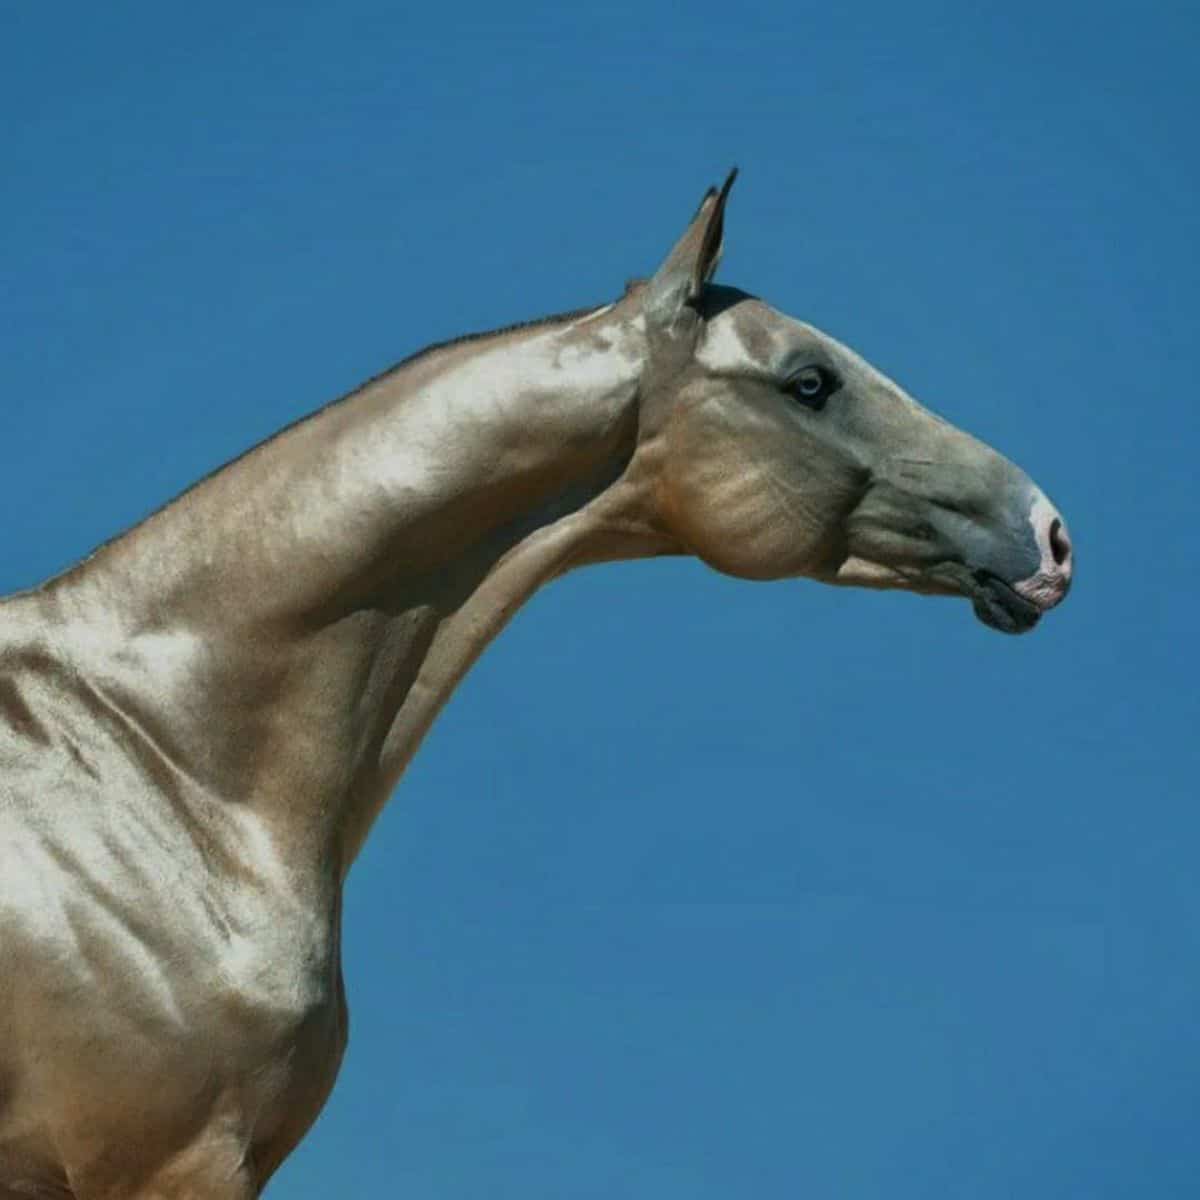 A gray Akhal-Teke horse with blue eyes.